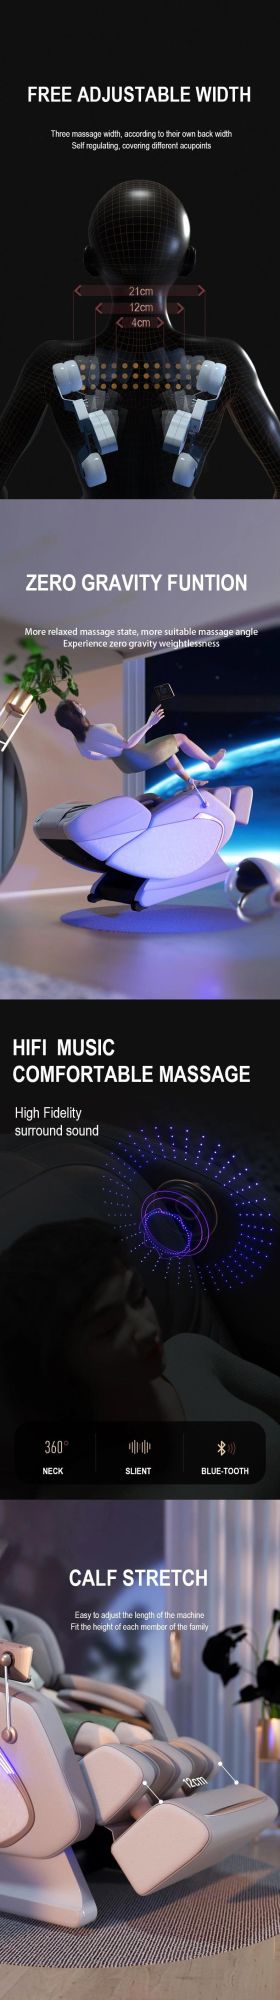 Wholesale Cheap Modern Professional Full Body Massage Chair High Quality Zero Gravity Massage Chair